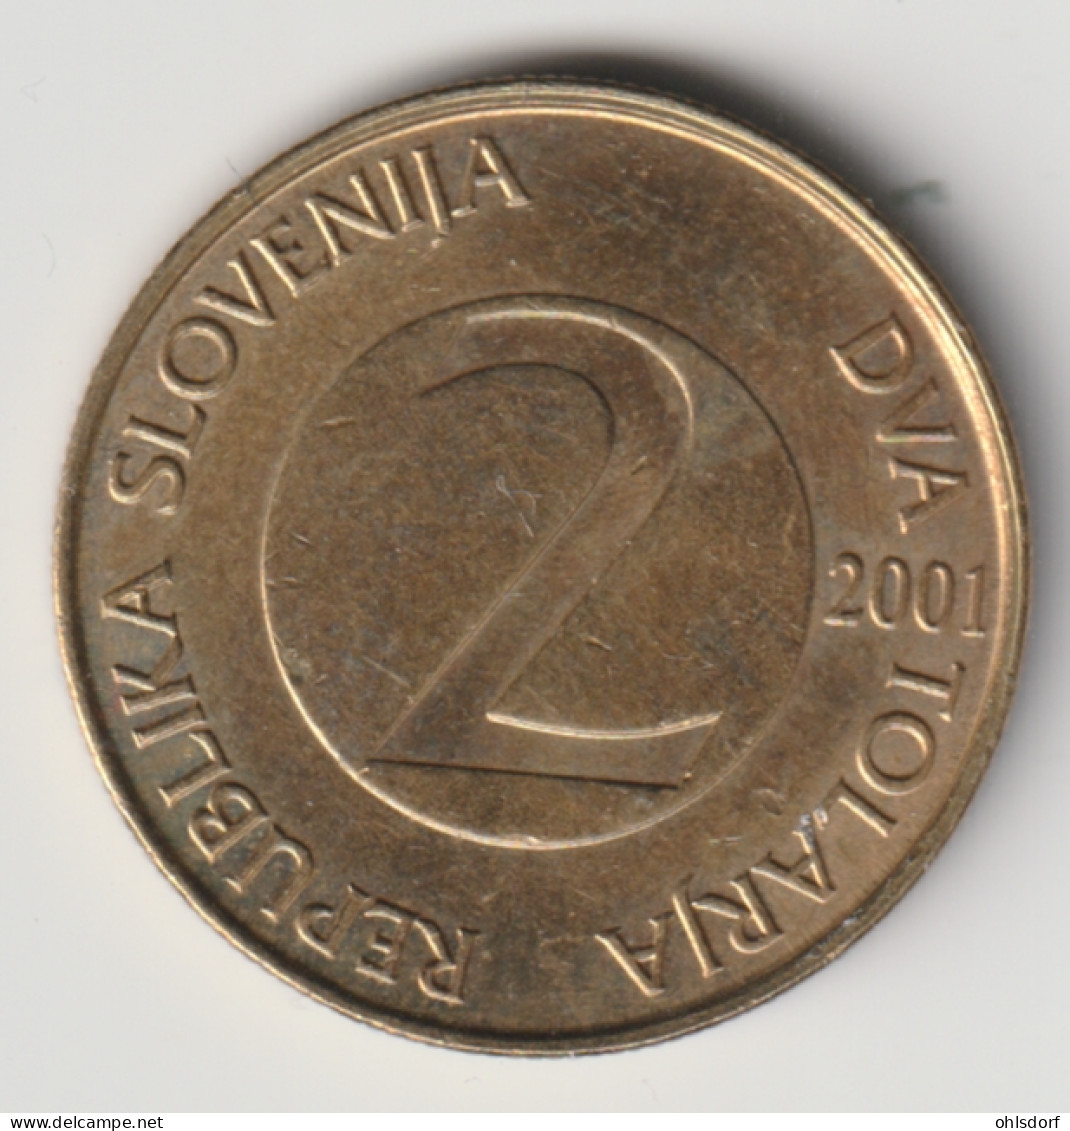 SLOVENIA 2001: 1 Tolar, KM 5 - Slovenia